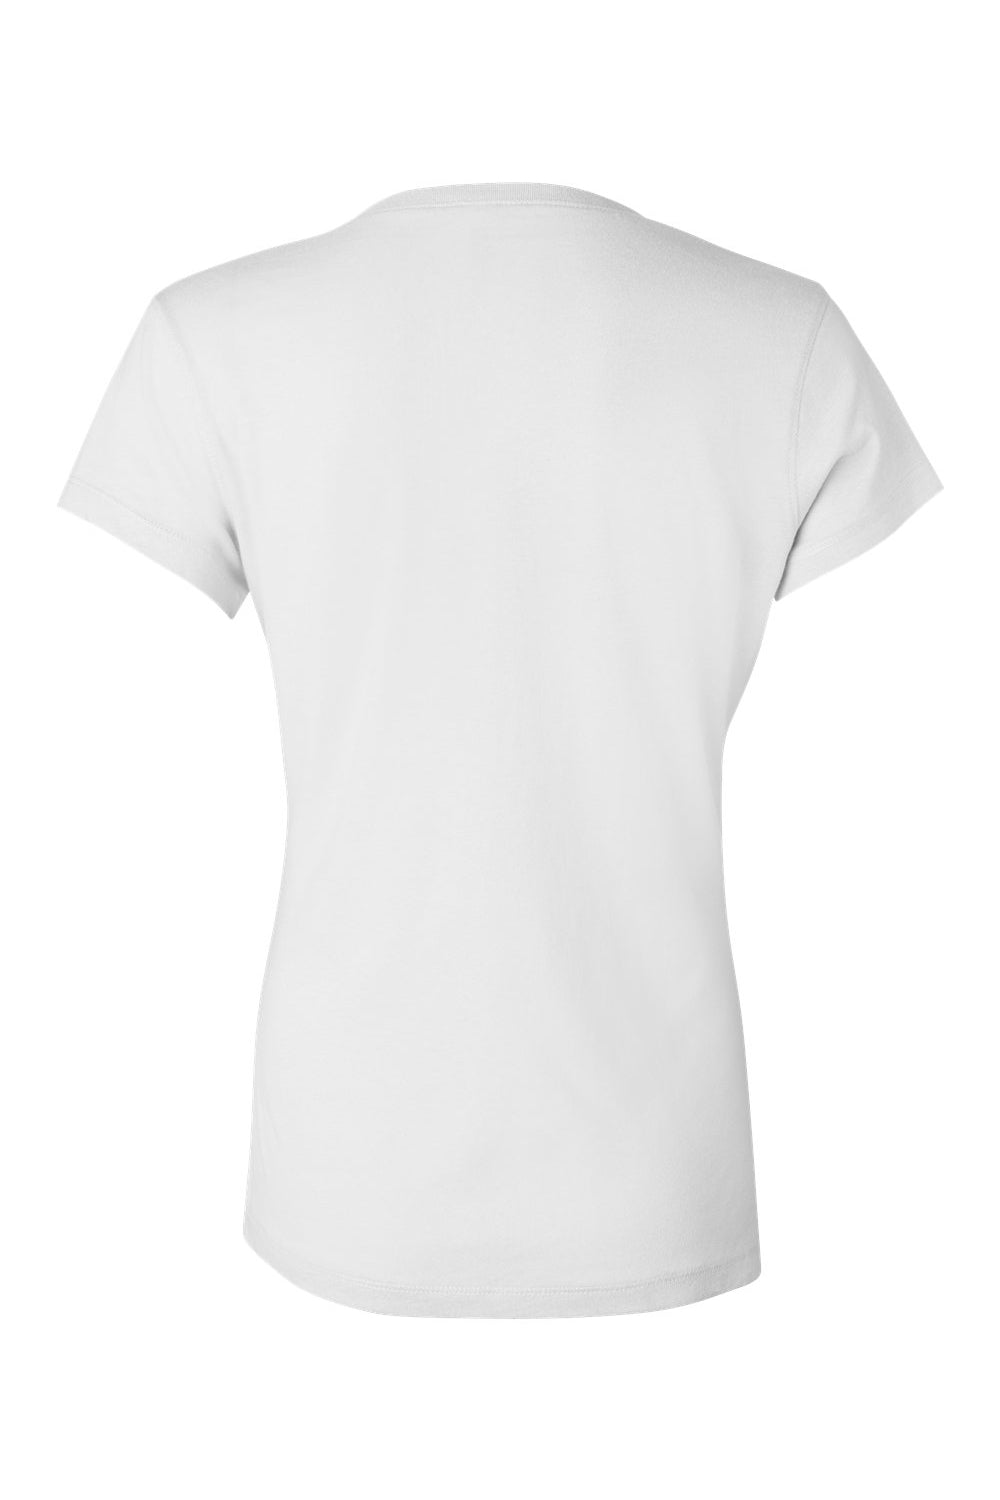 Bella + Canvas B6005/6005 Womens Jersey Short Sleeve V-Neck T-Shirt White Flat Back